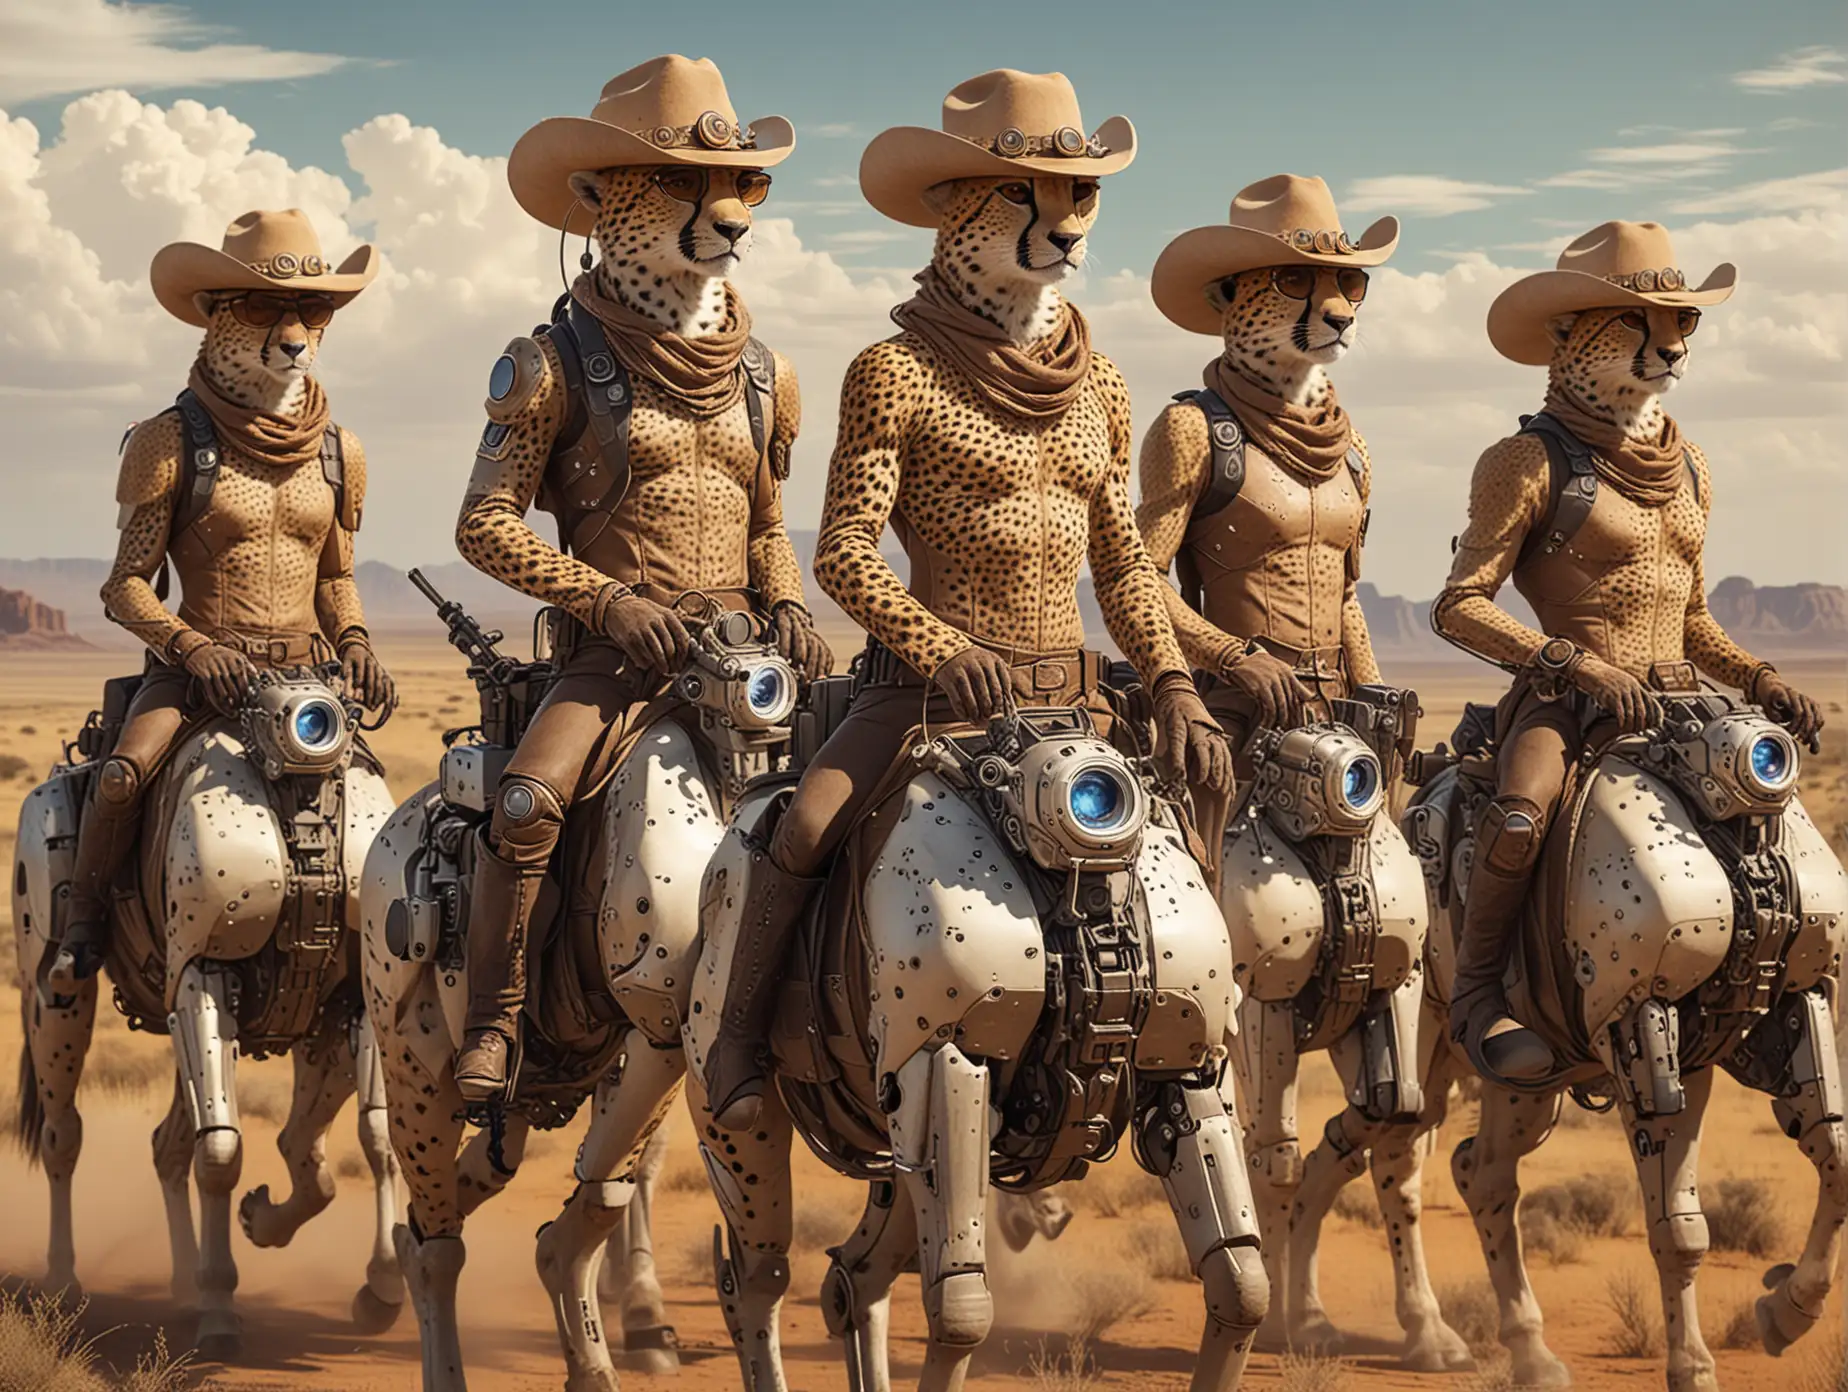 Futuristic-CheetahHuman-Cowboys-Riding-RoboticTechHorses-on-Cyber-Savanna